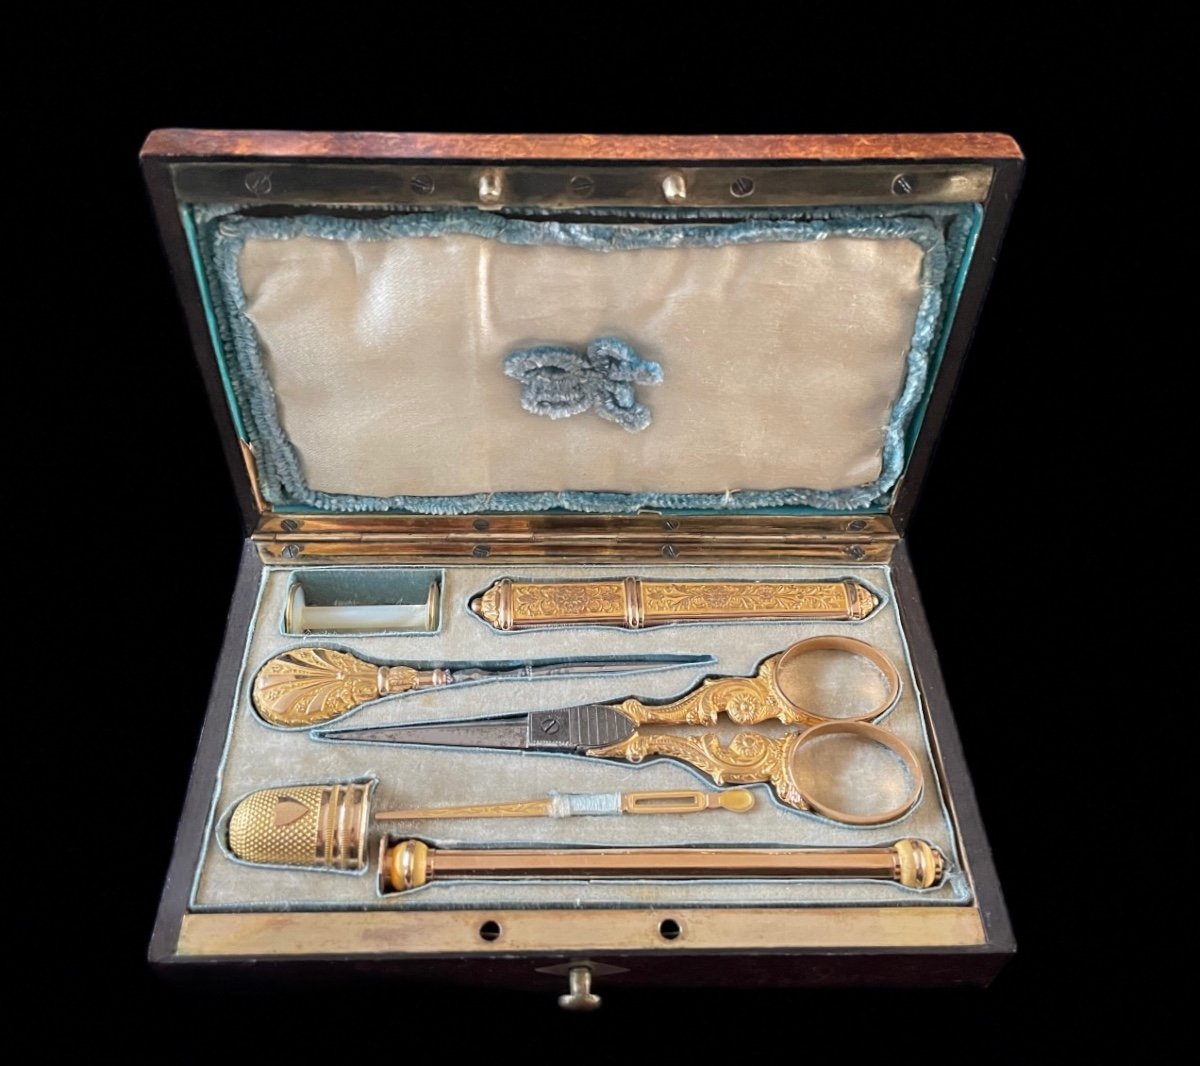 Mme De L, Luxurious Sewing Box With Gold Accessories, Paris, Louis XVIII Era